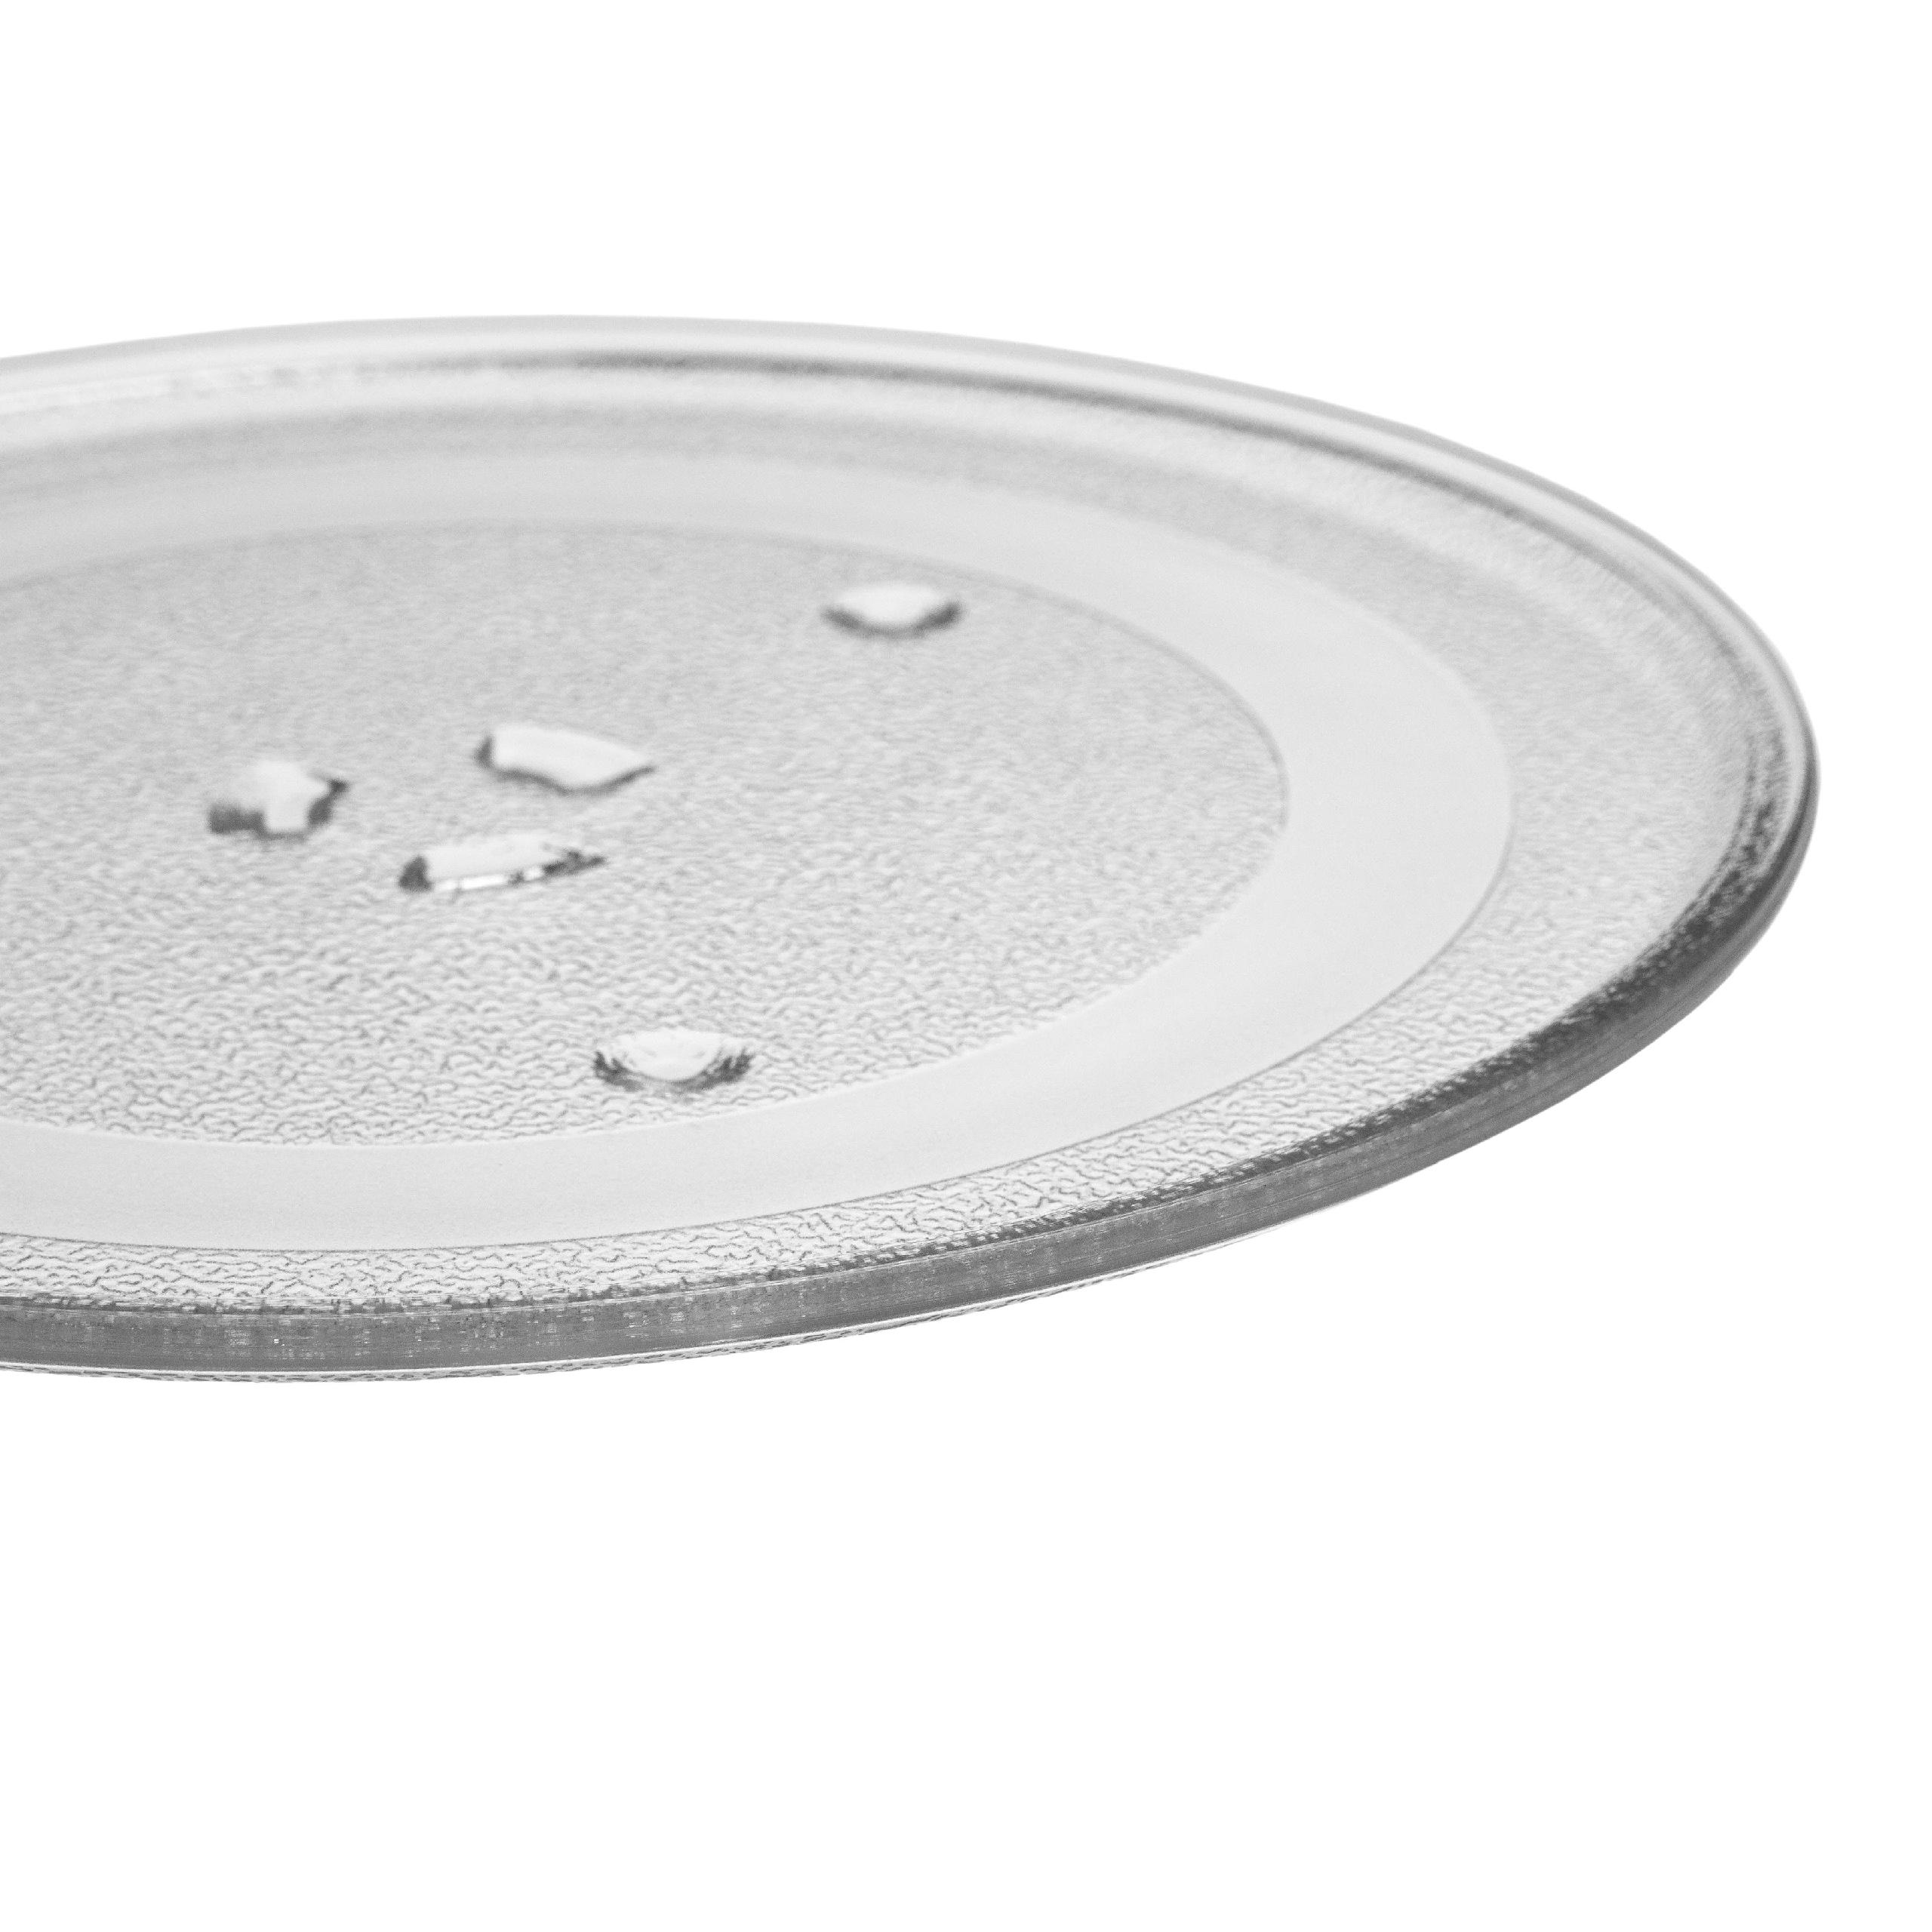 vidrio plato para microondas, plato giratorio de 28,8 cm para microondas Samsung CE1777 etc.